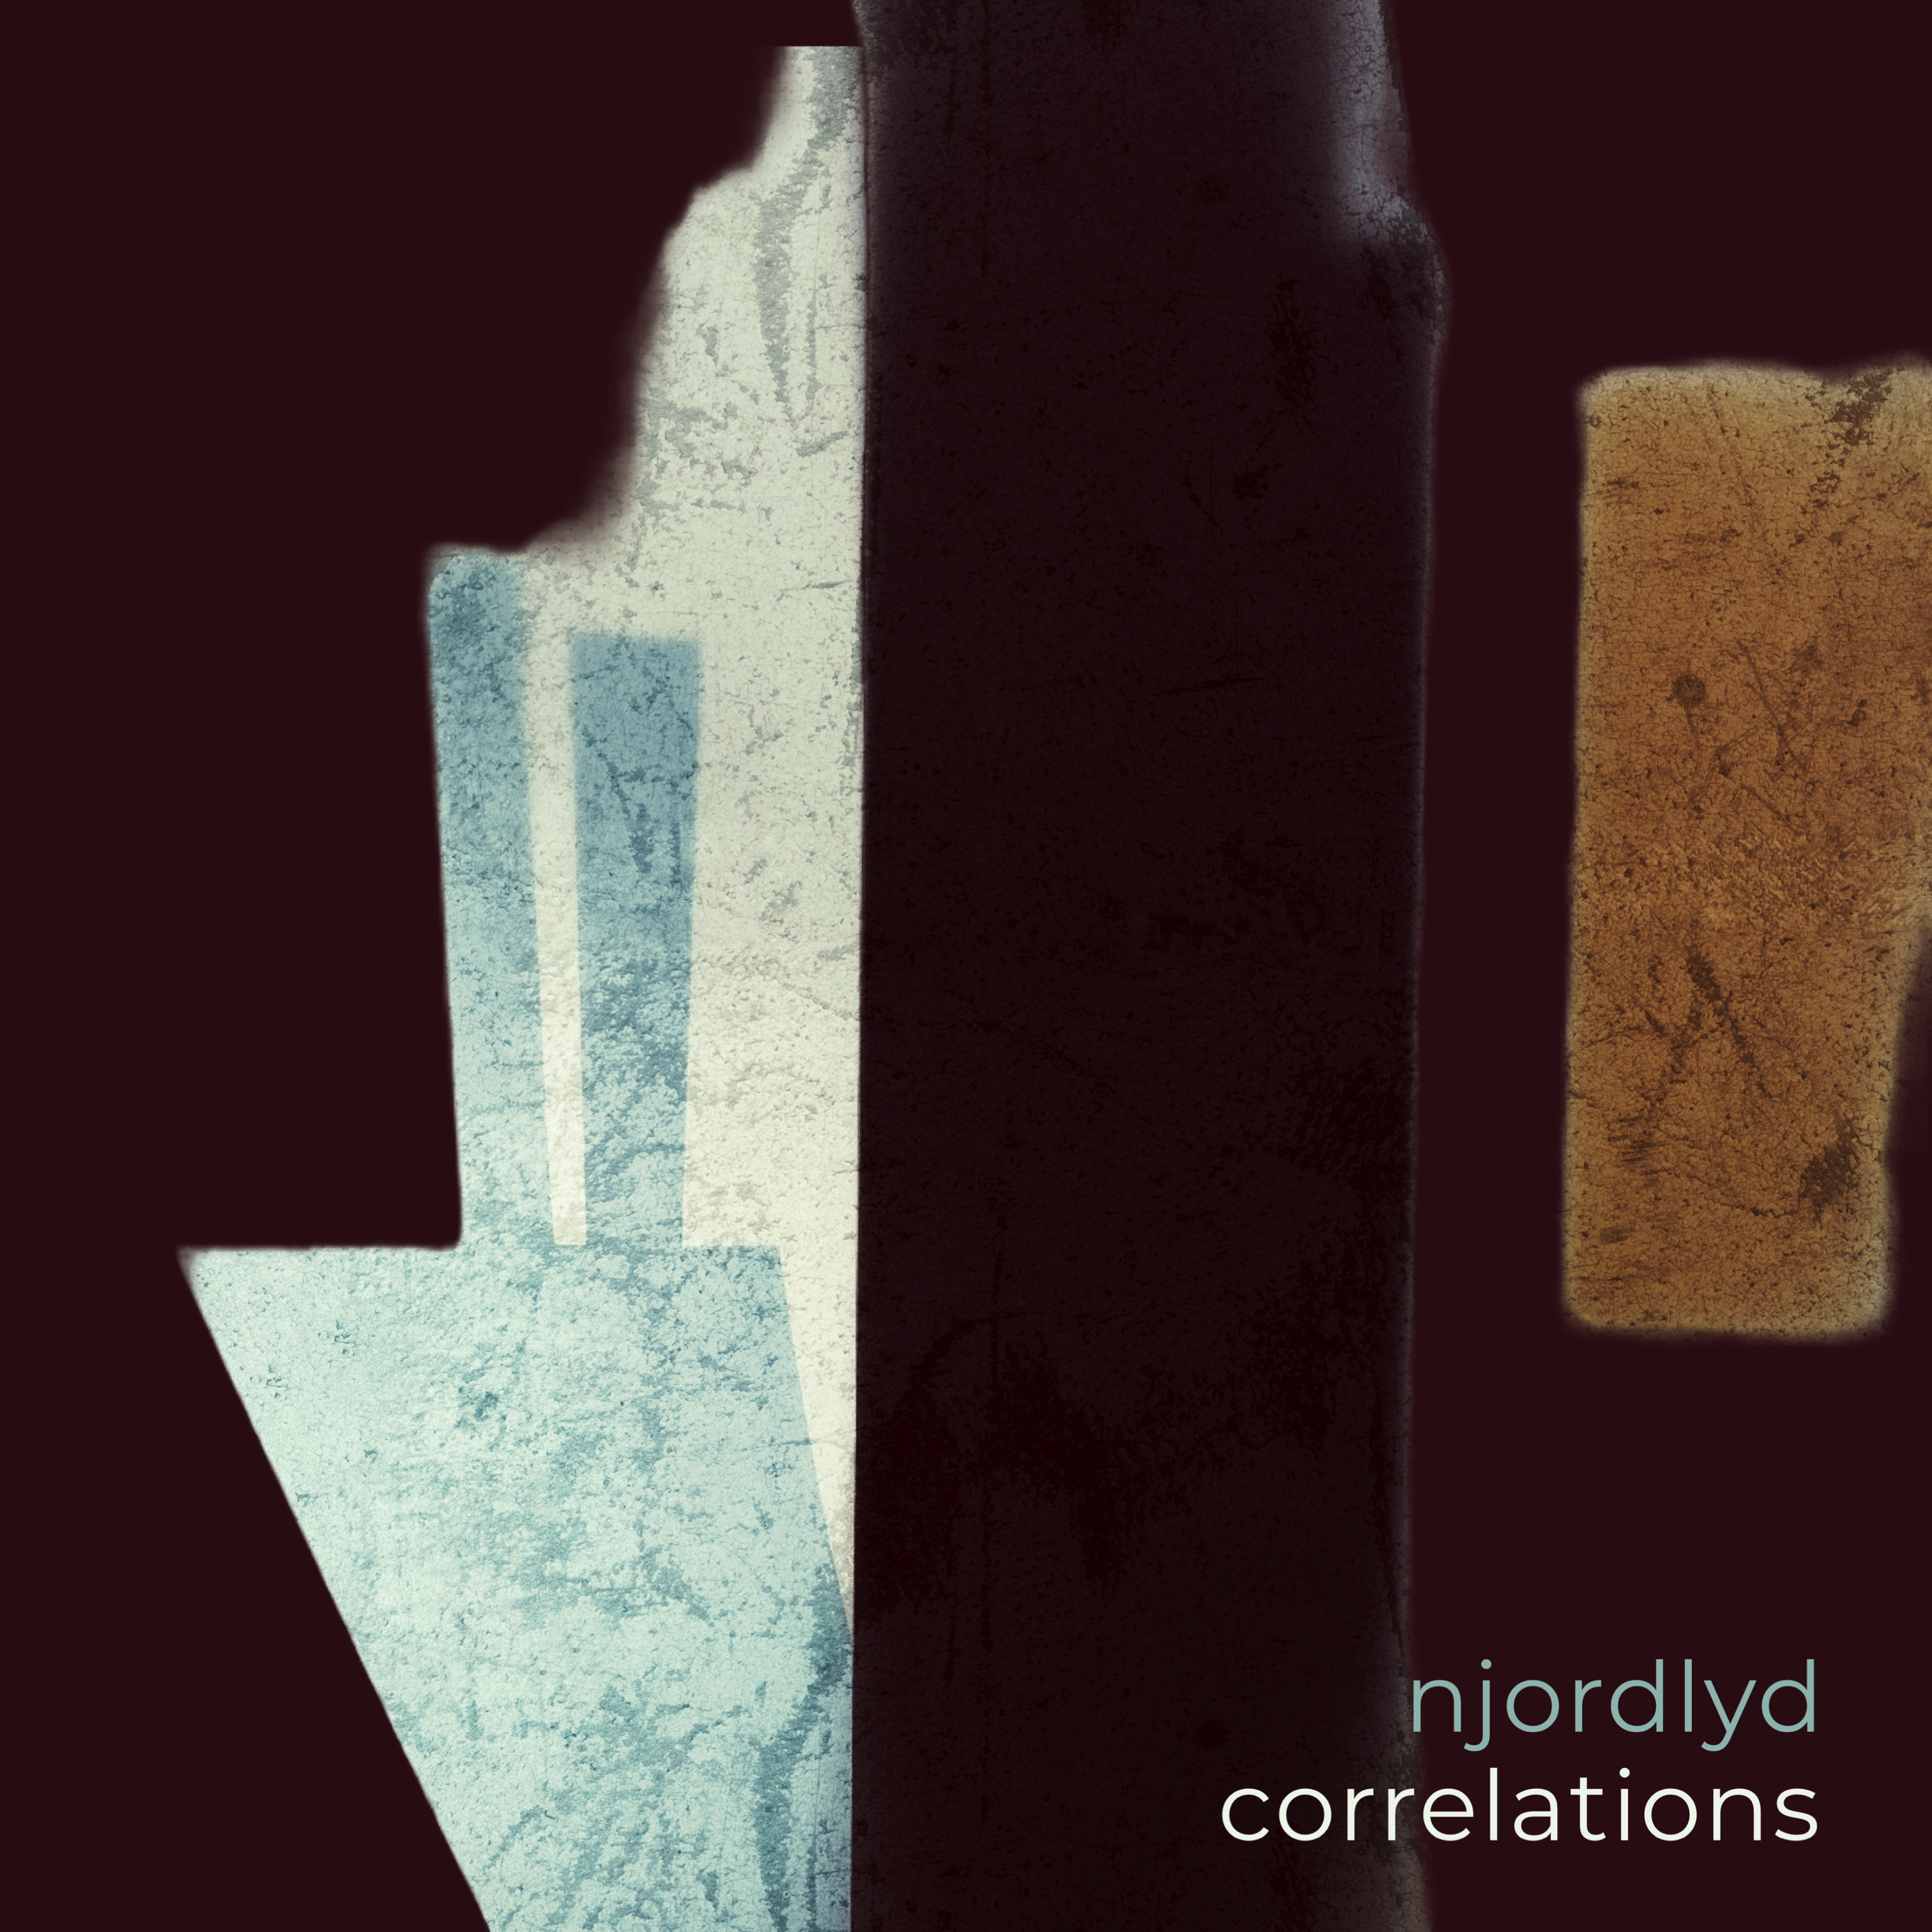 “Correlations Part Three” Dark Industrial Ambient Journey by Njordlyd